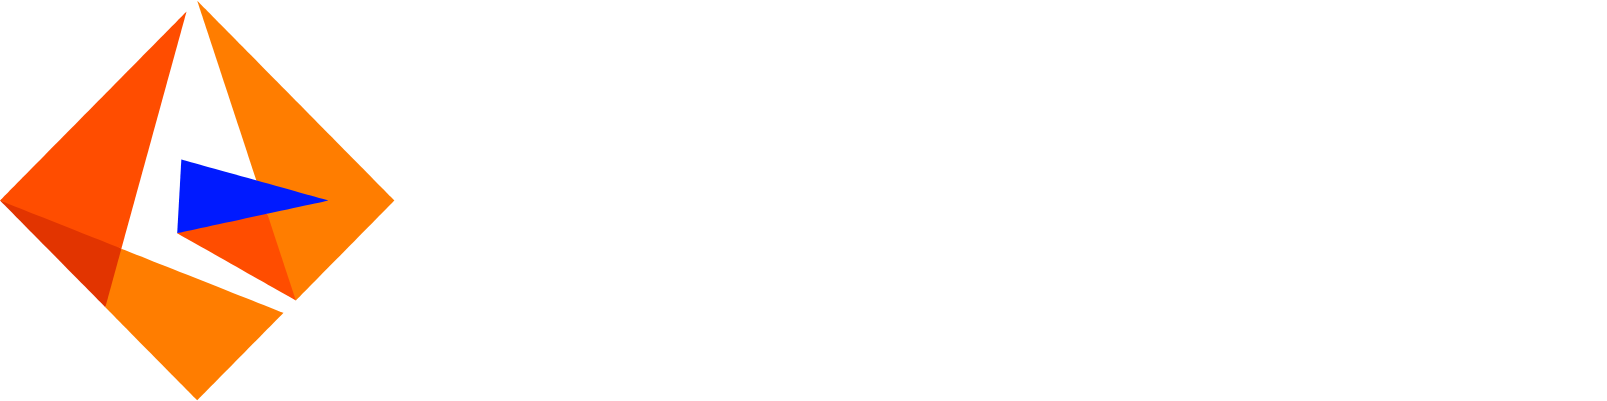 Informatica logo grand pour les fonds sombres (PNG transparent)